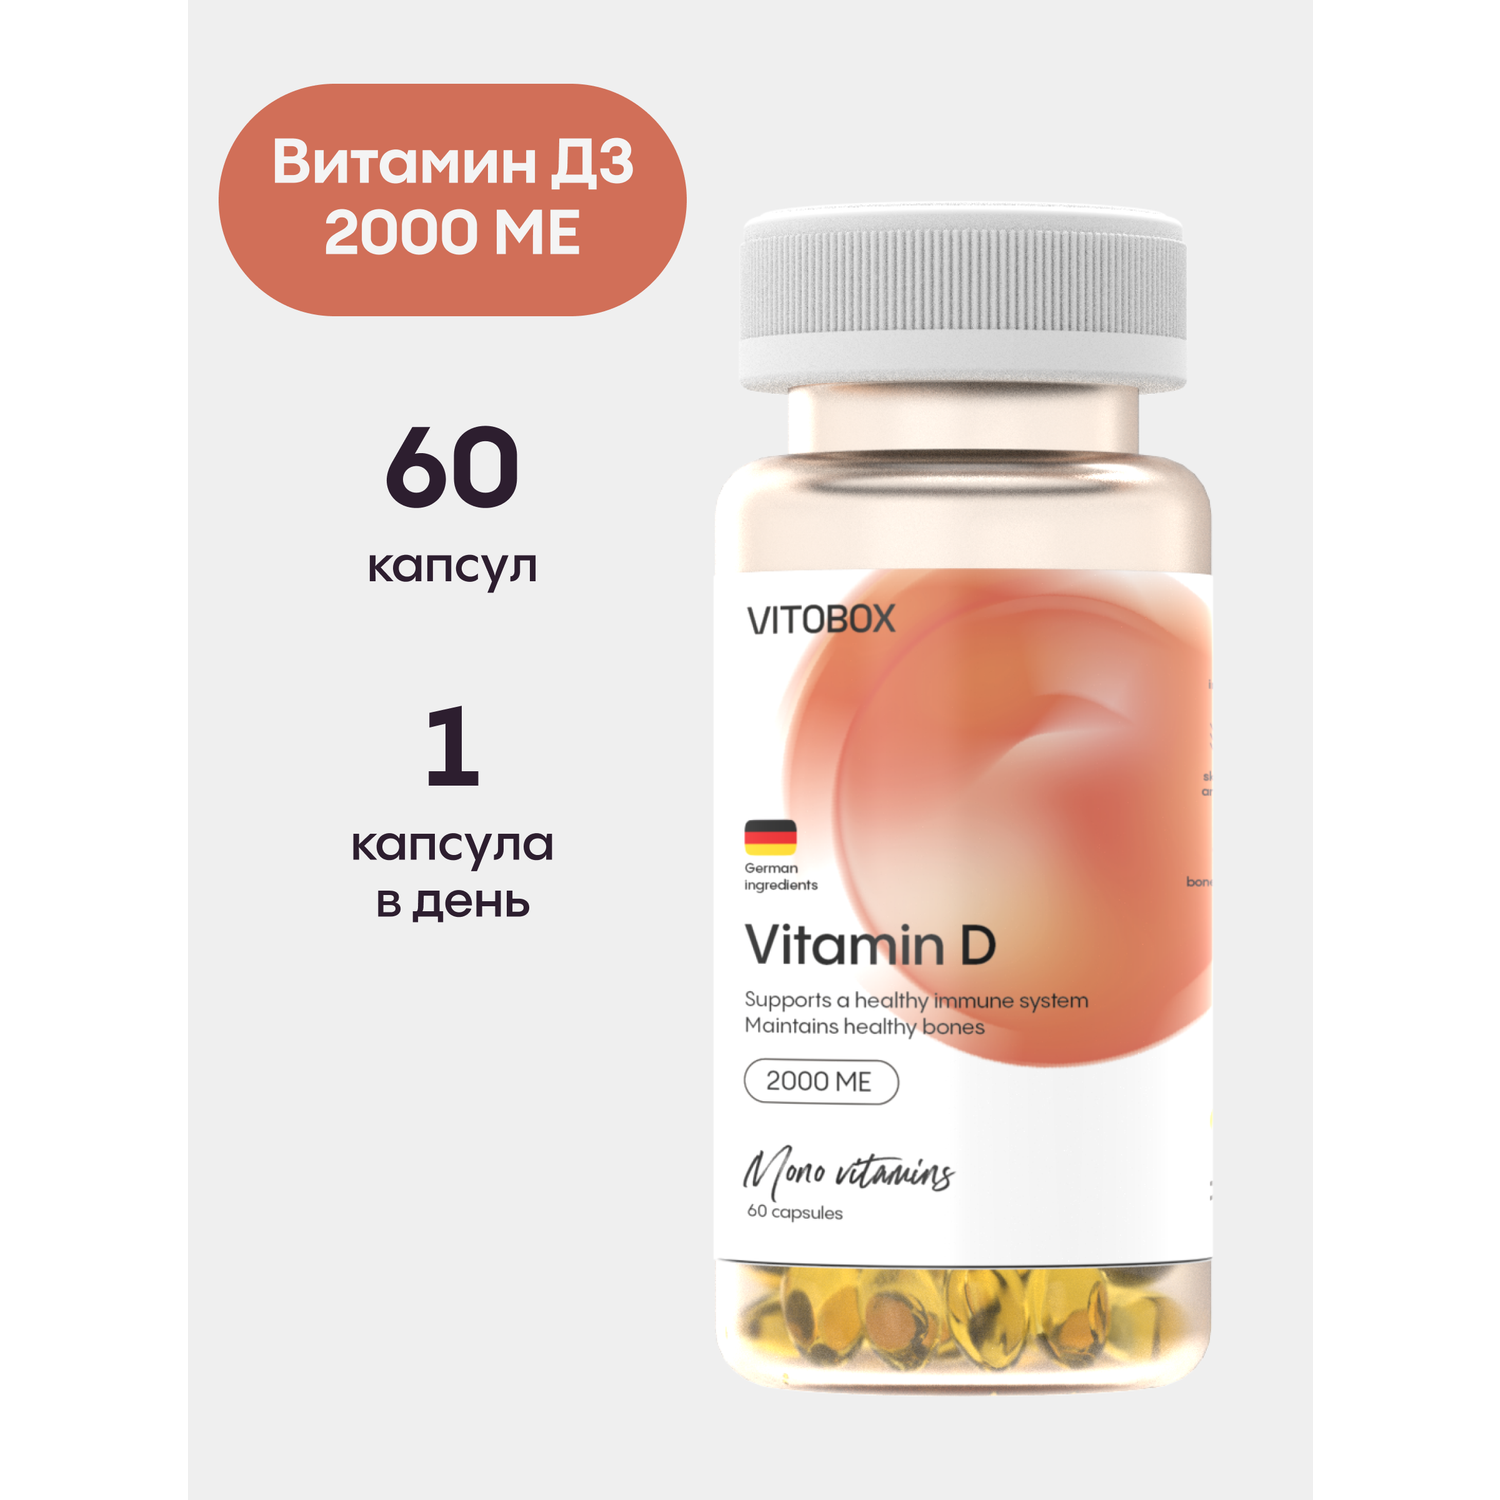 Витамин D 2000 МЕ VITOBOX 60 капсул - фото 1